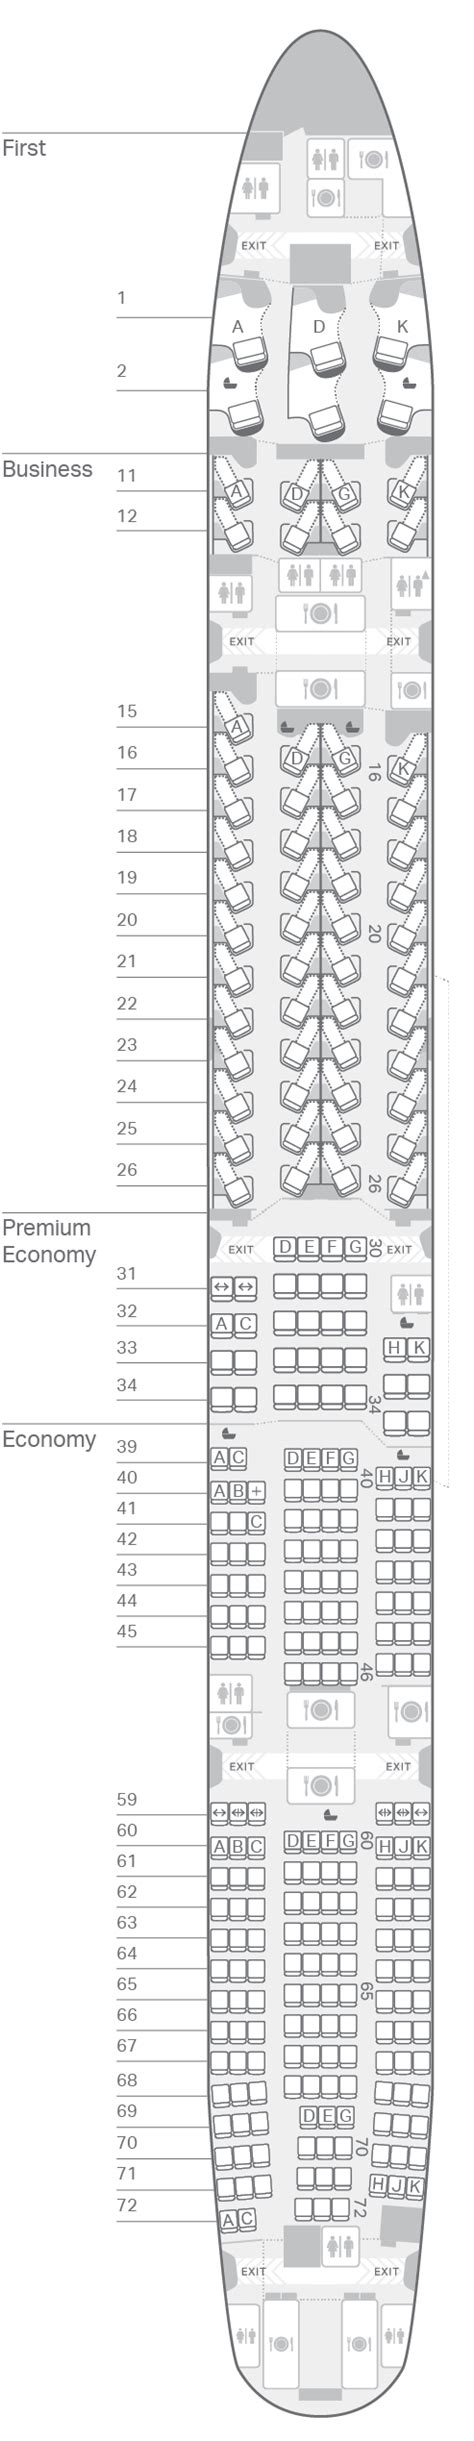 Boeing Seat Layout